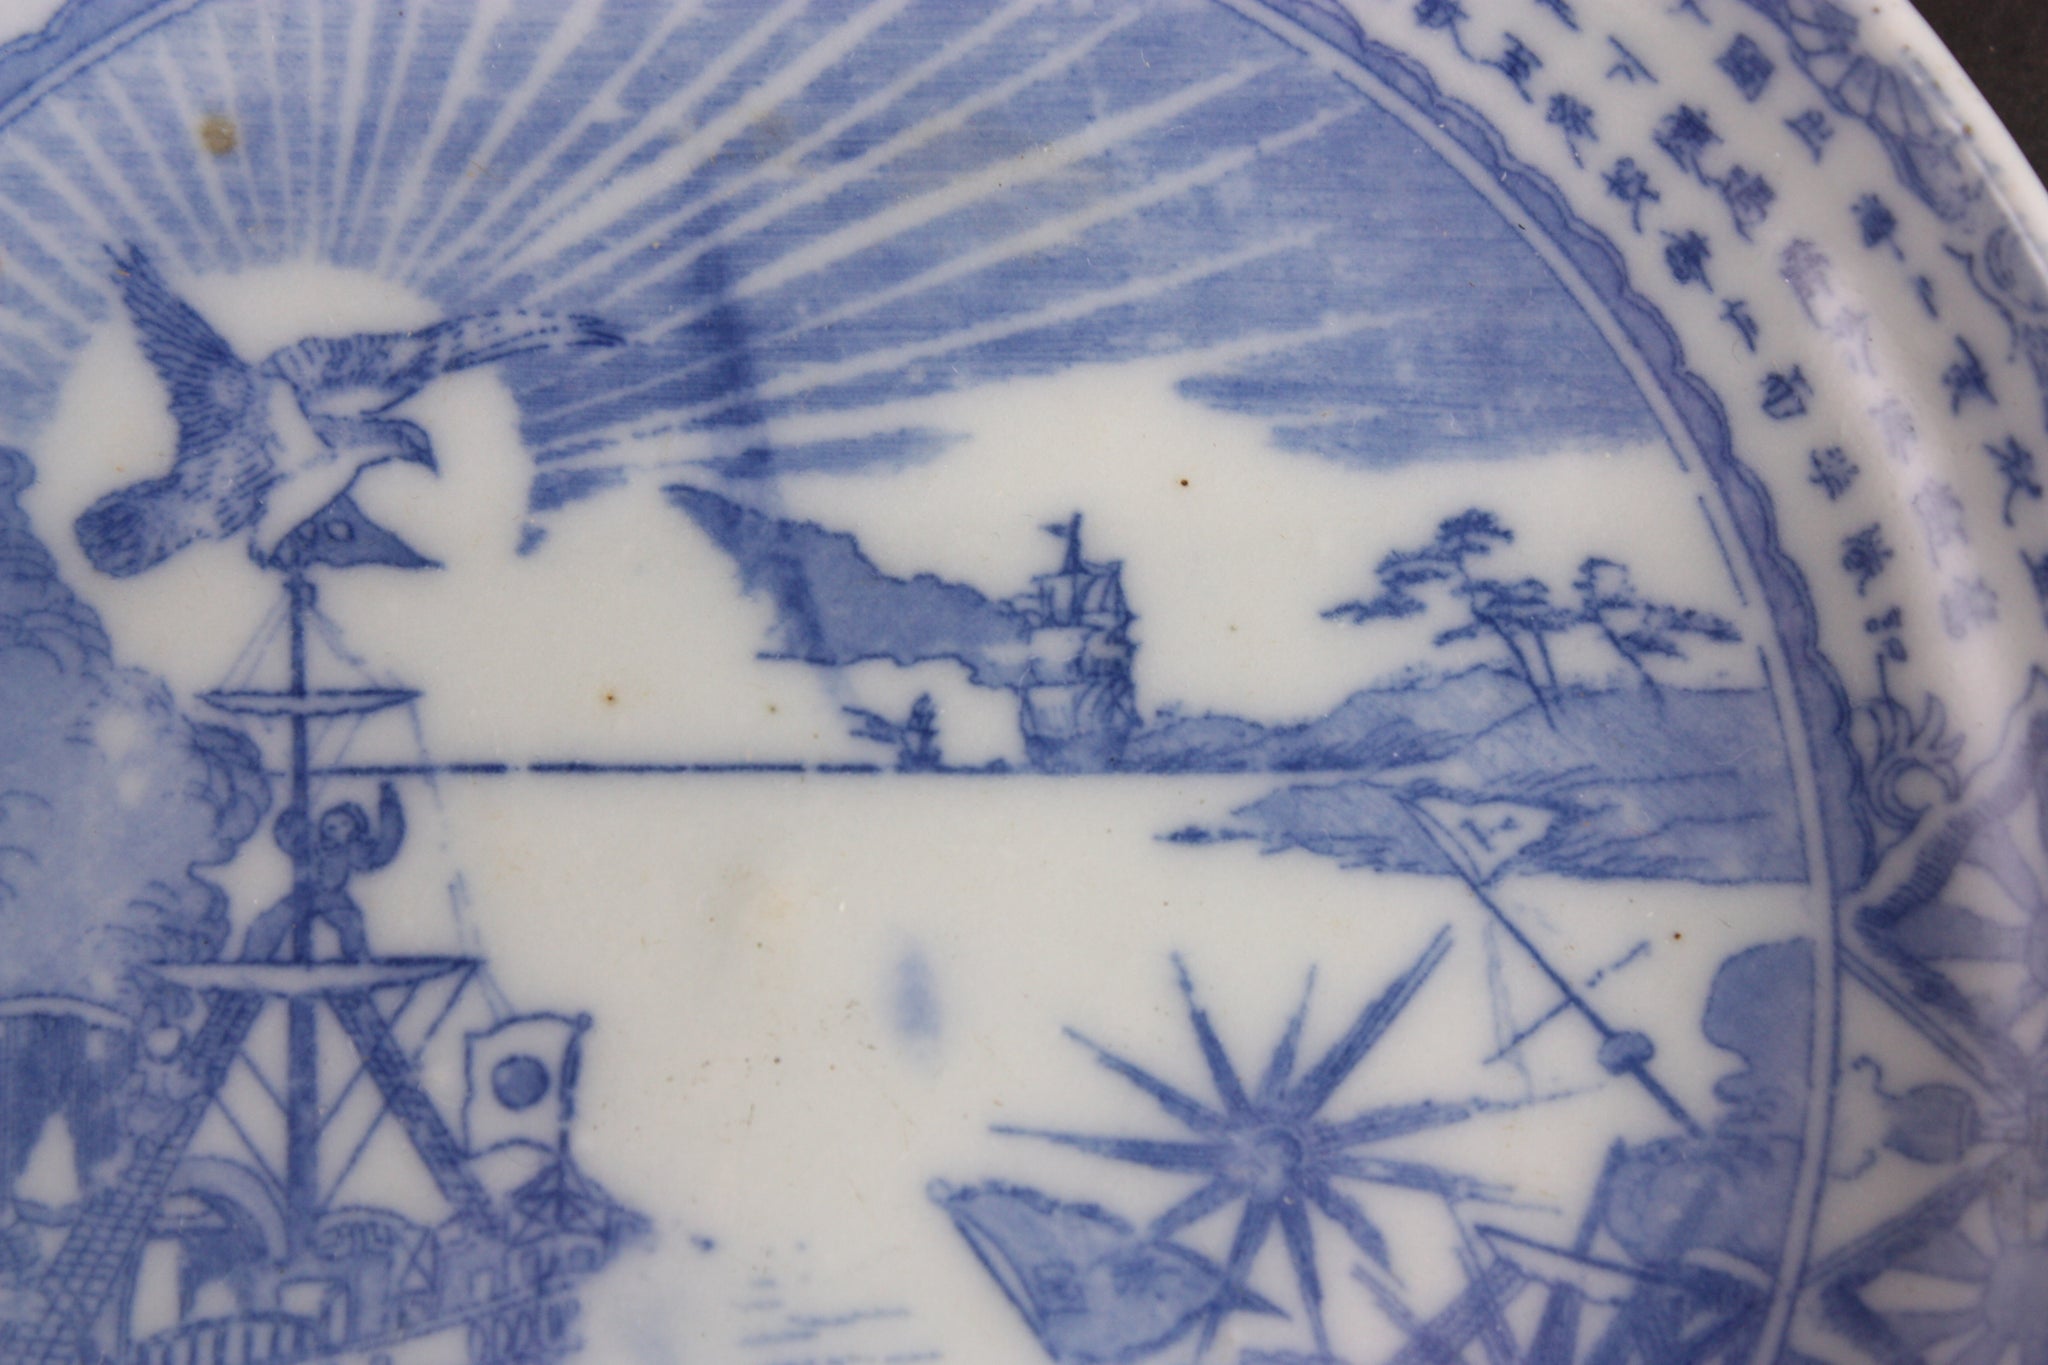 Antique Sino Japanese War 1895 Battle of Weihaiwei Navy Dish